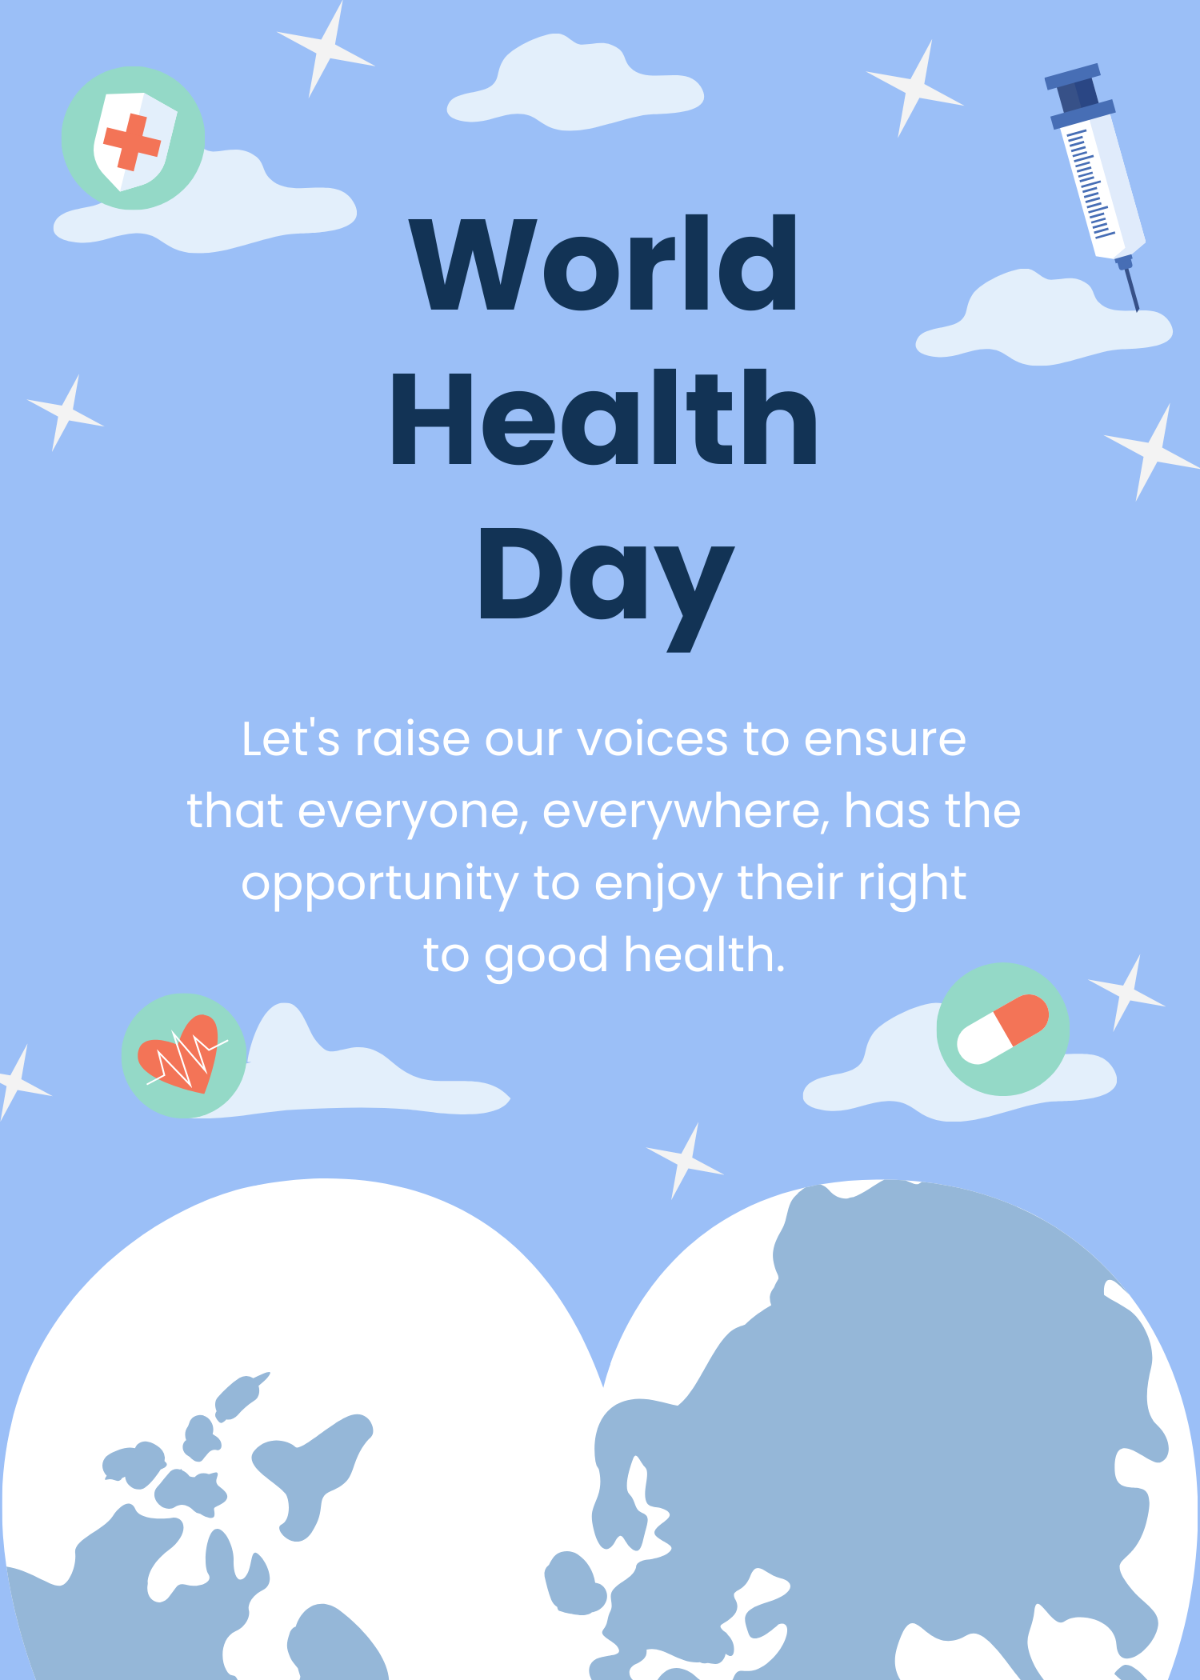 World Health Day Message